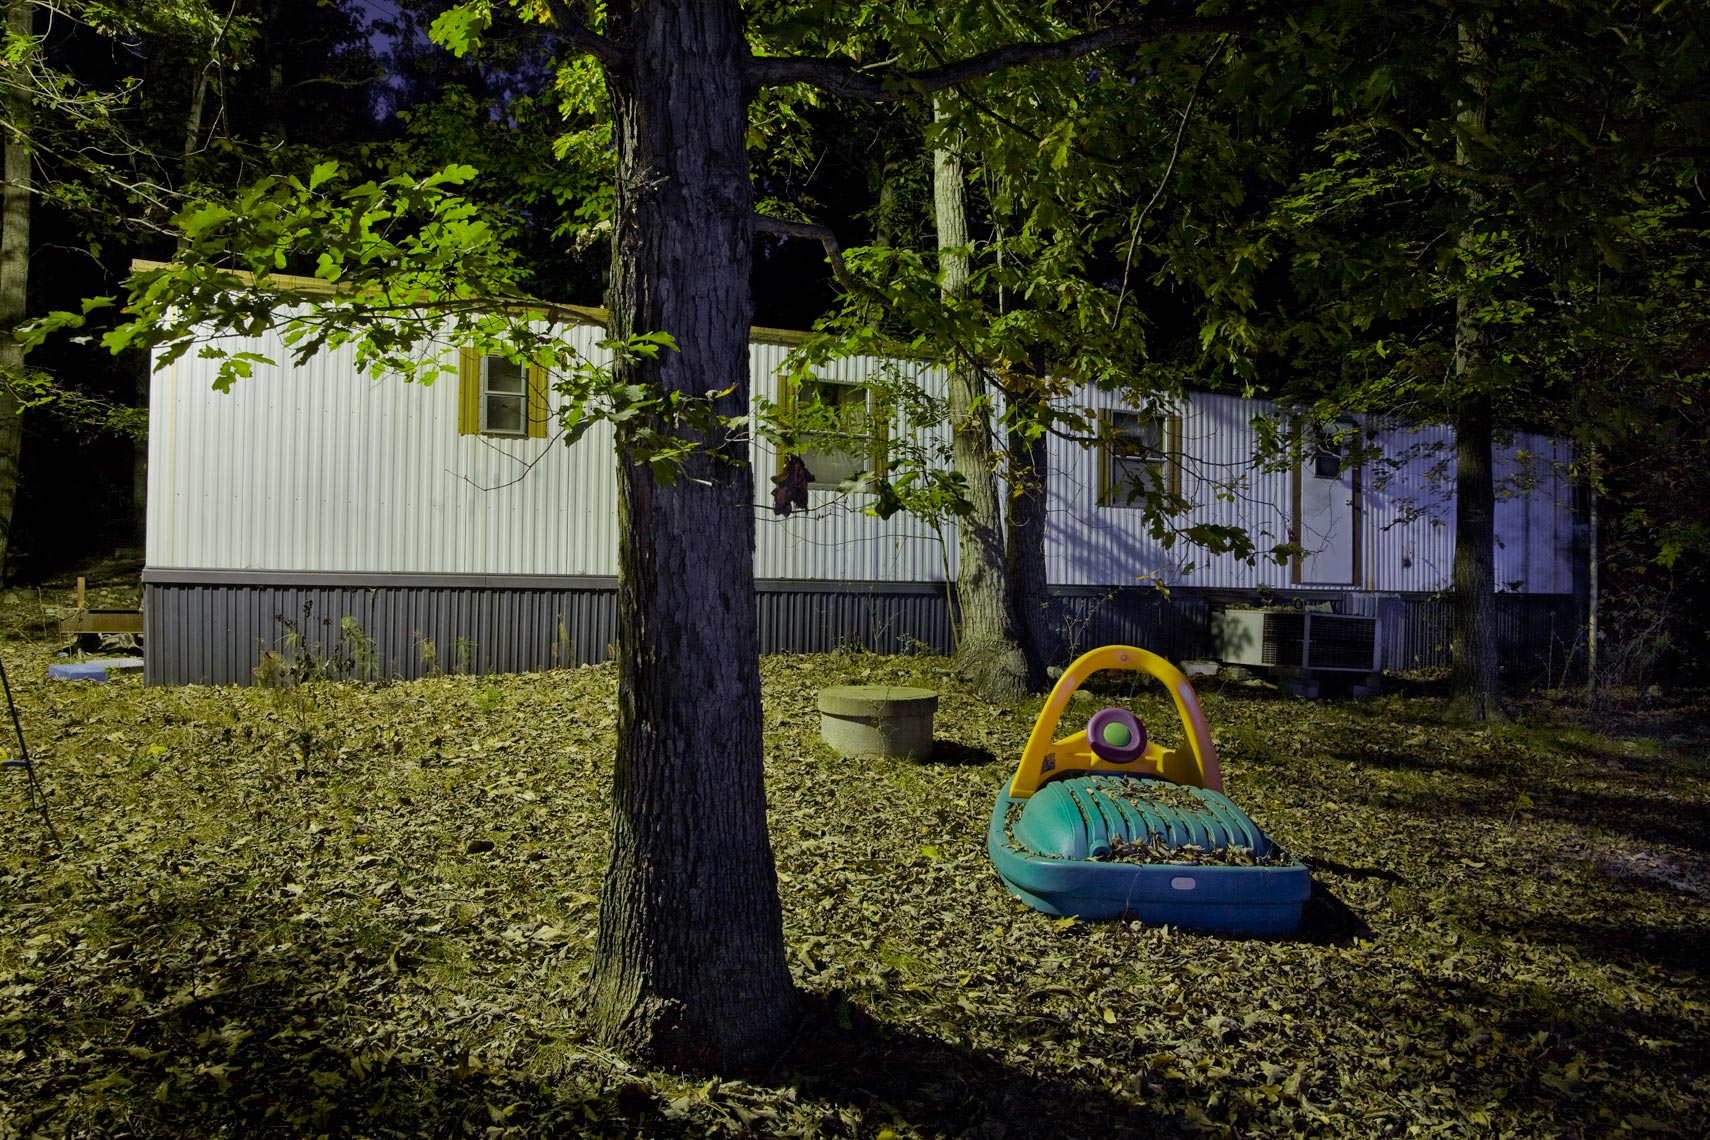  Abandoned trailer at night, Chapel Hill, NC